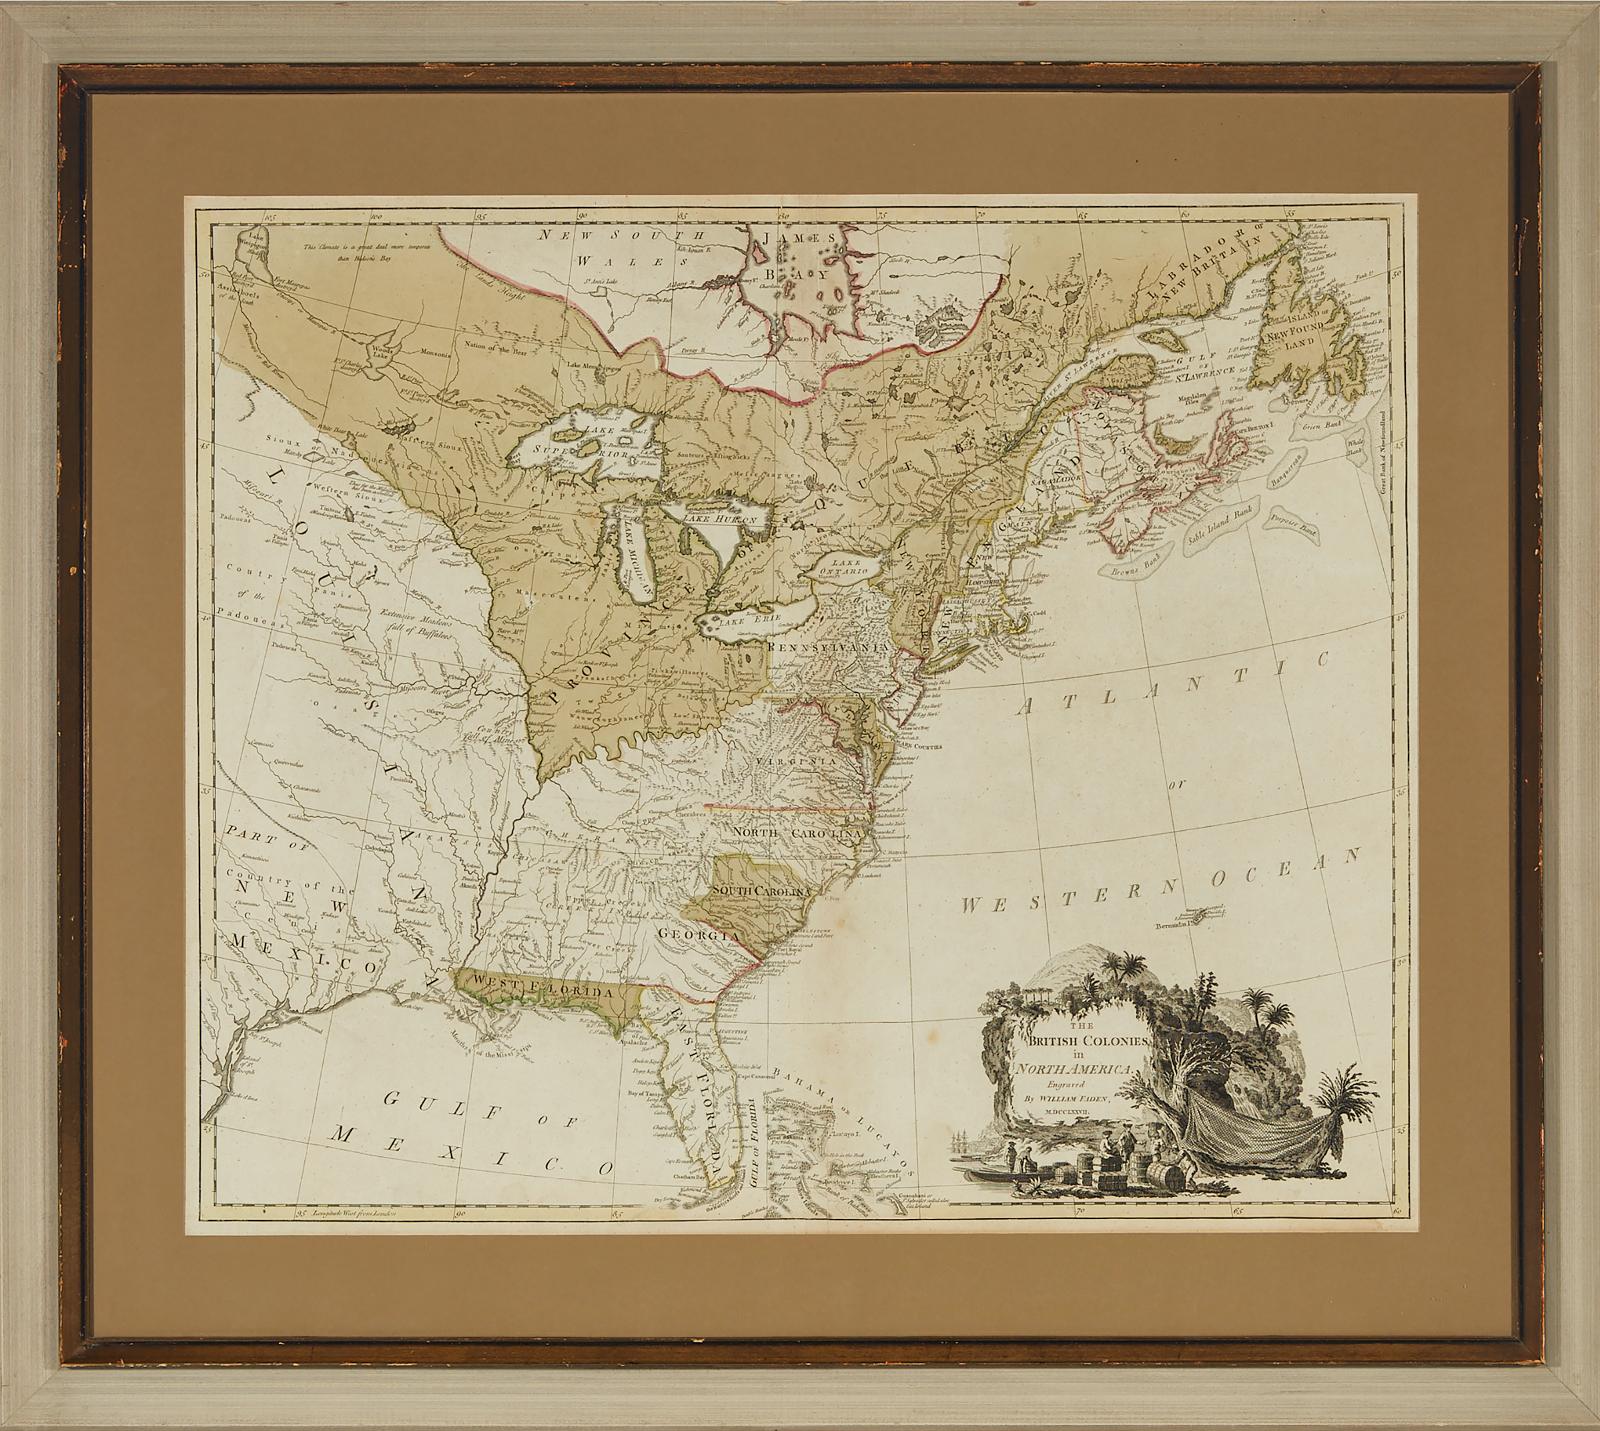 William Faden (1750-1836) - The British Colonies In North America, 1777